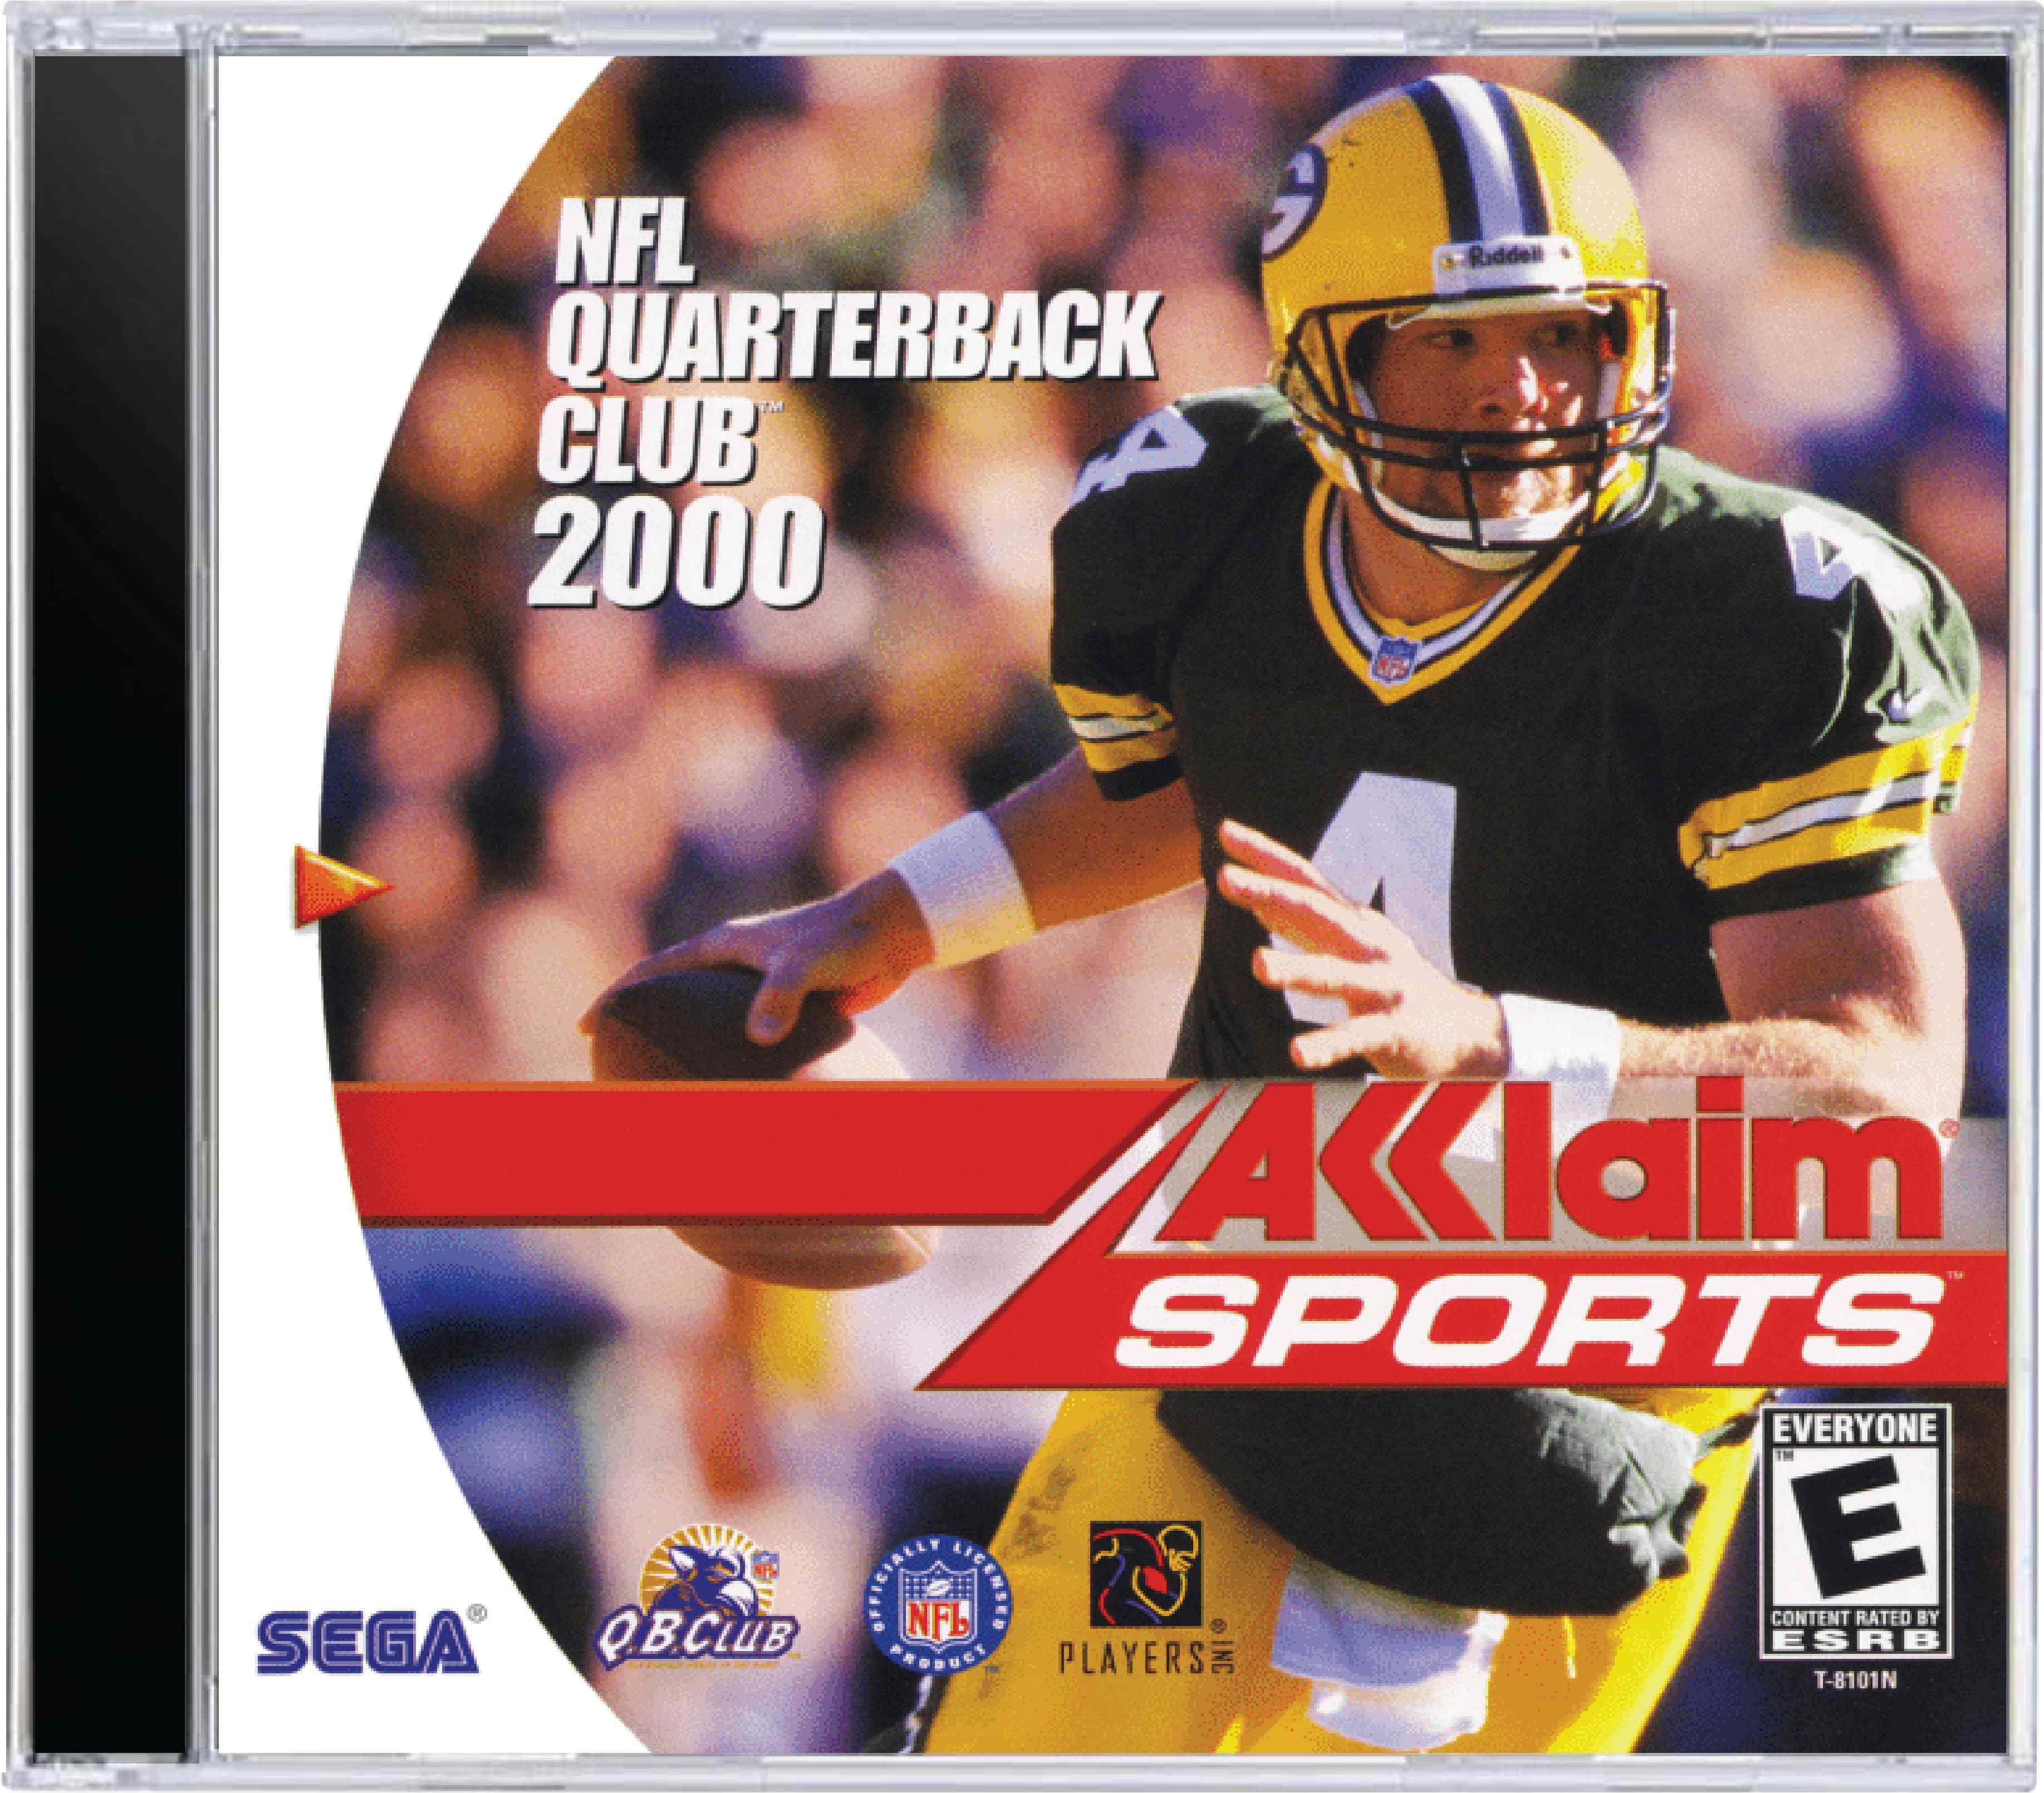 NFL Quarterback Club 2000 Cover Art